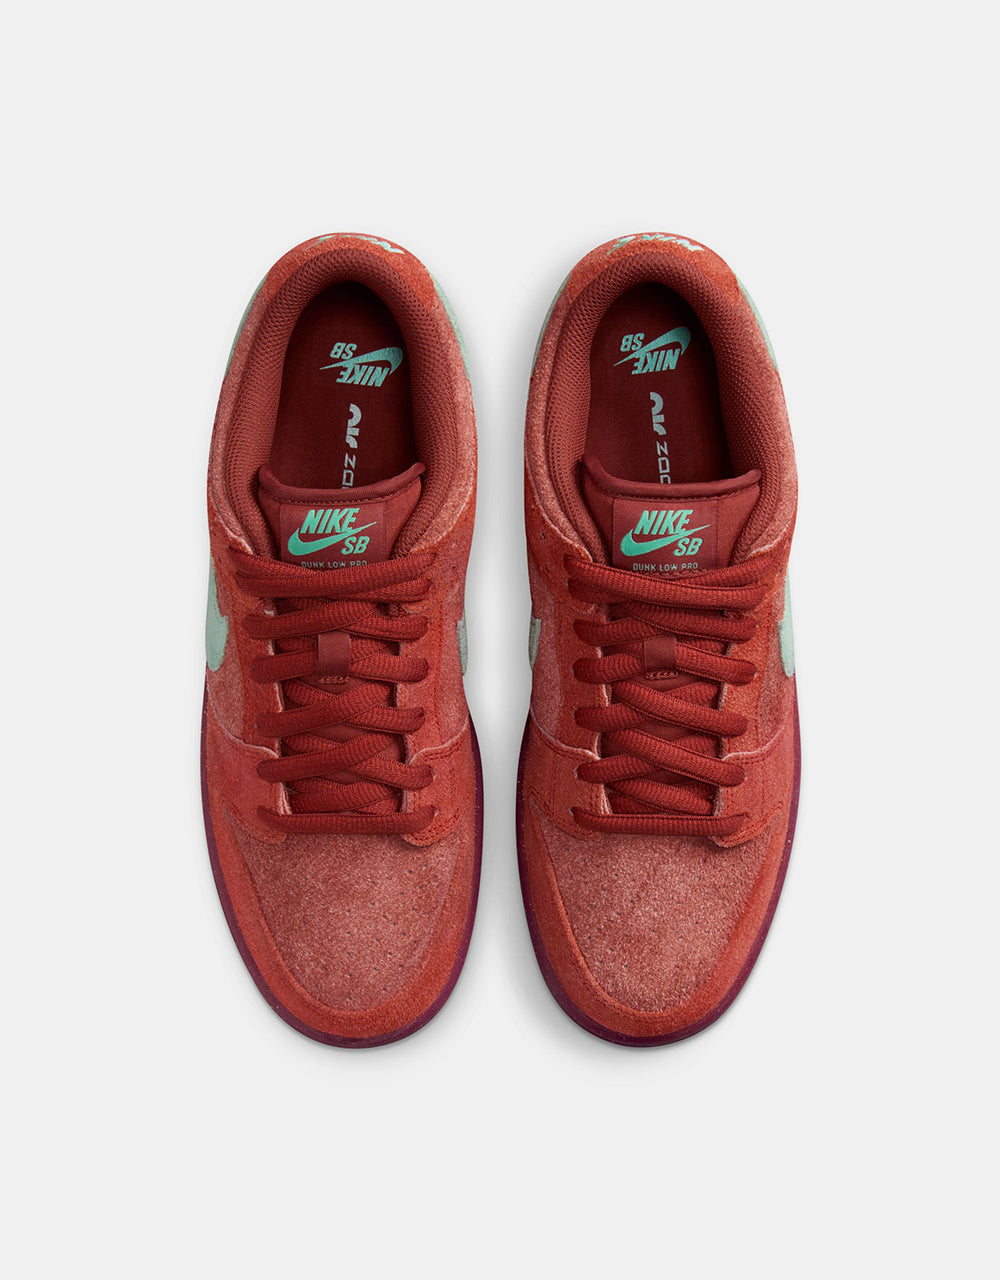 Nike SB Dunk Low Pro Premium Skate Shoes - Mystic Red/Emerald Rise-Rugged Orange-Rosewood-Mystic Red